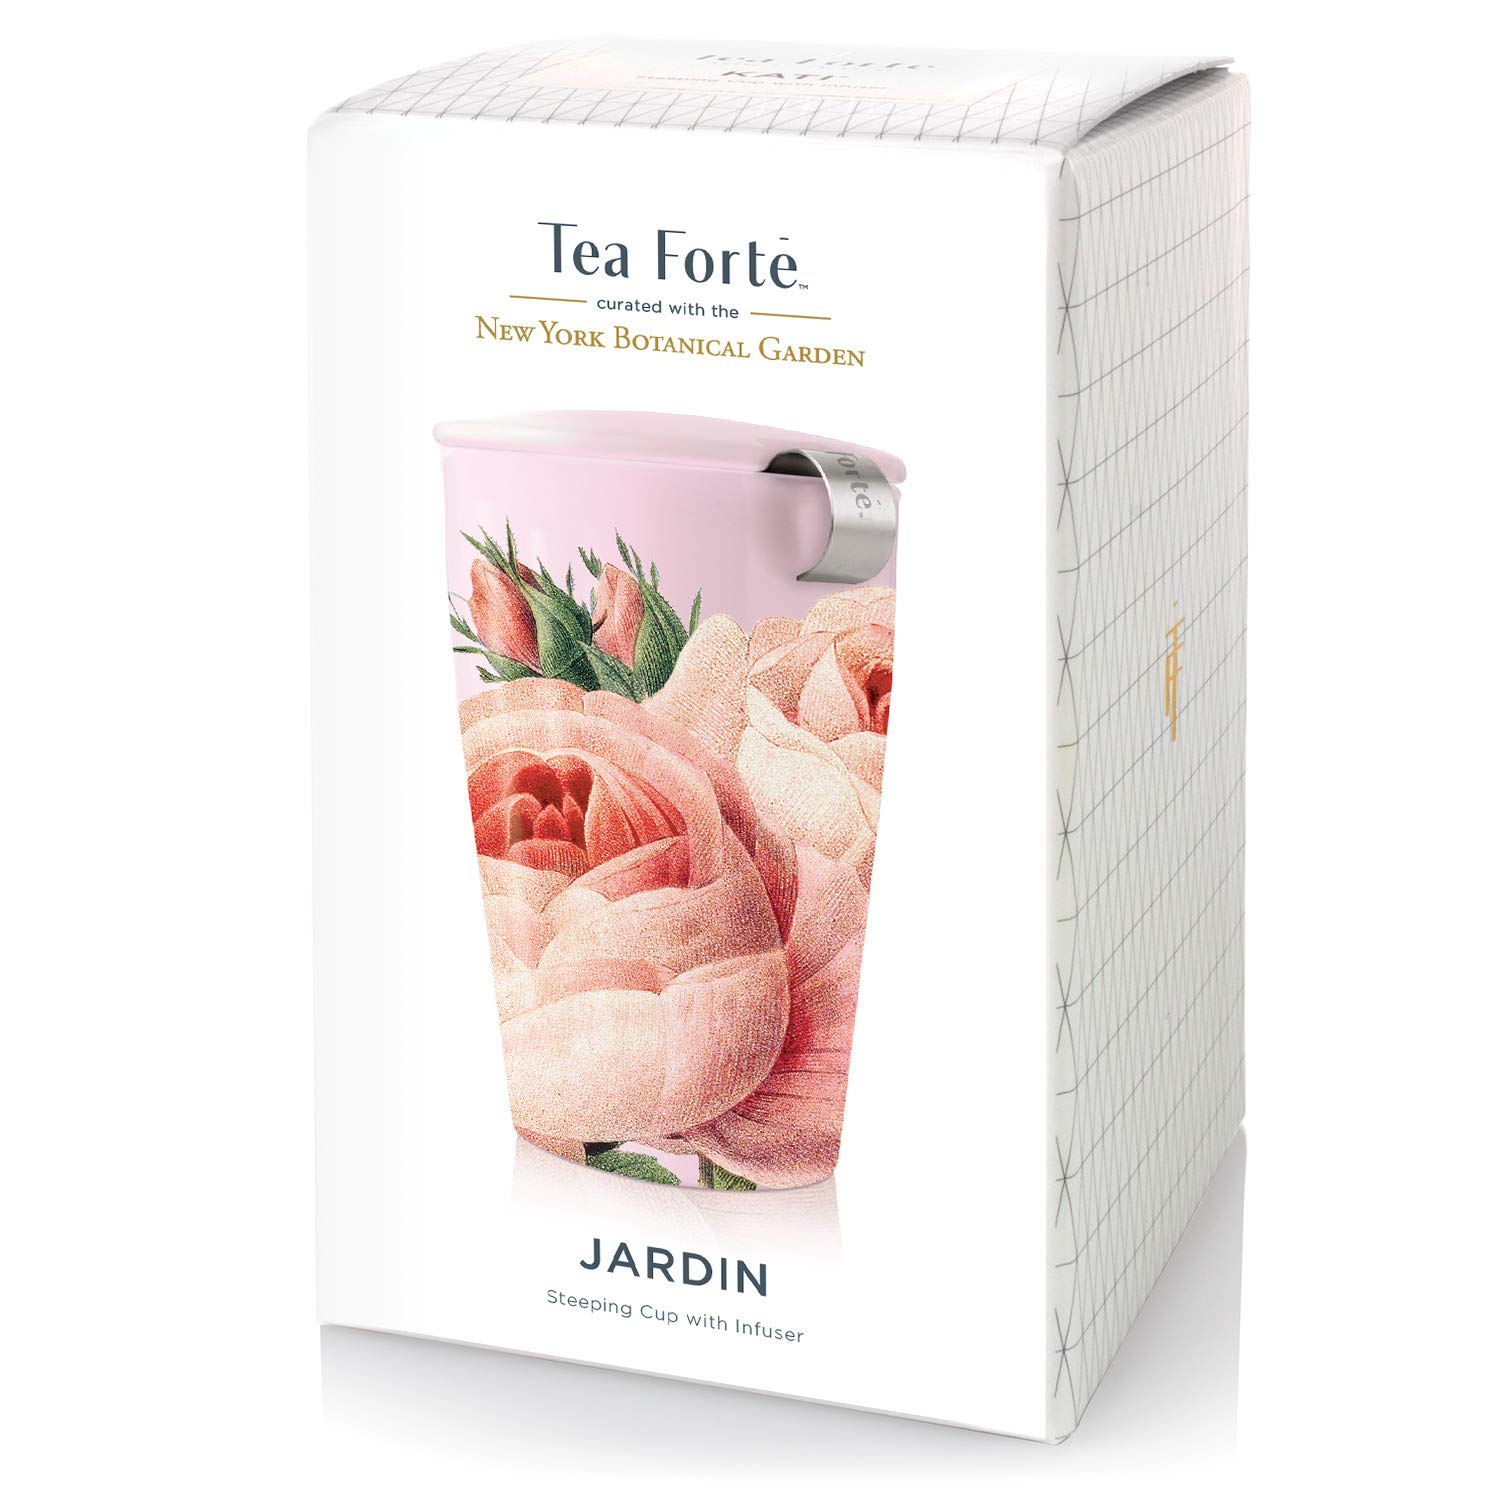 Tea Forte Kati Cup Jardin, Ceramic Tea Infuser Cup with Infuser Basket and Lid for Steeping Loose Leaf Tea